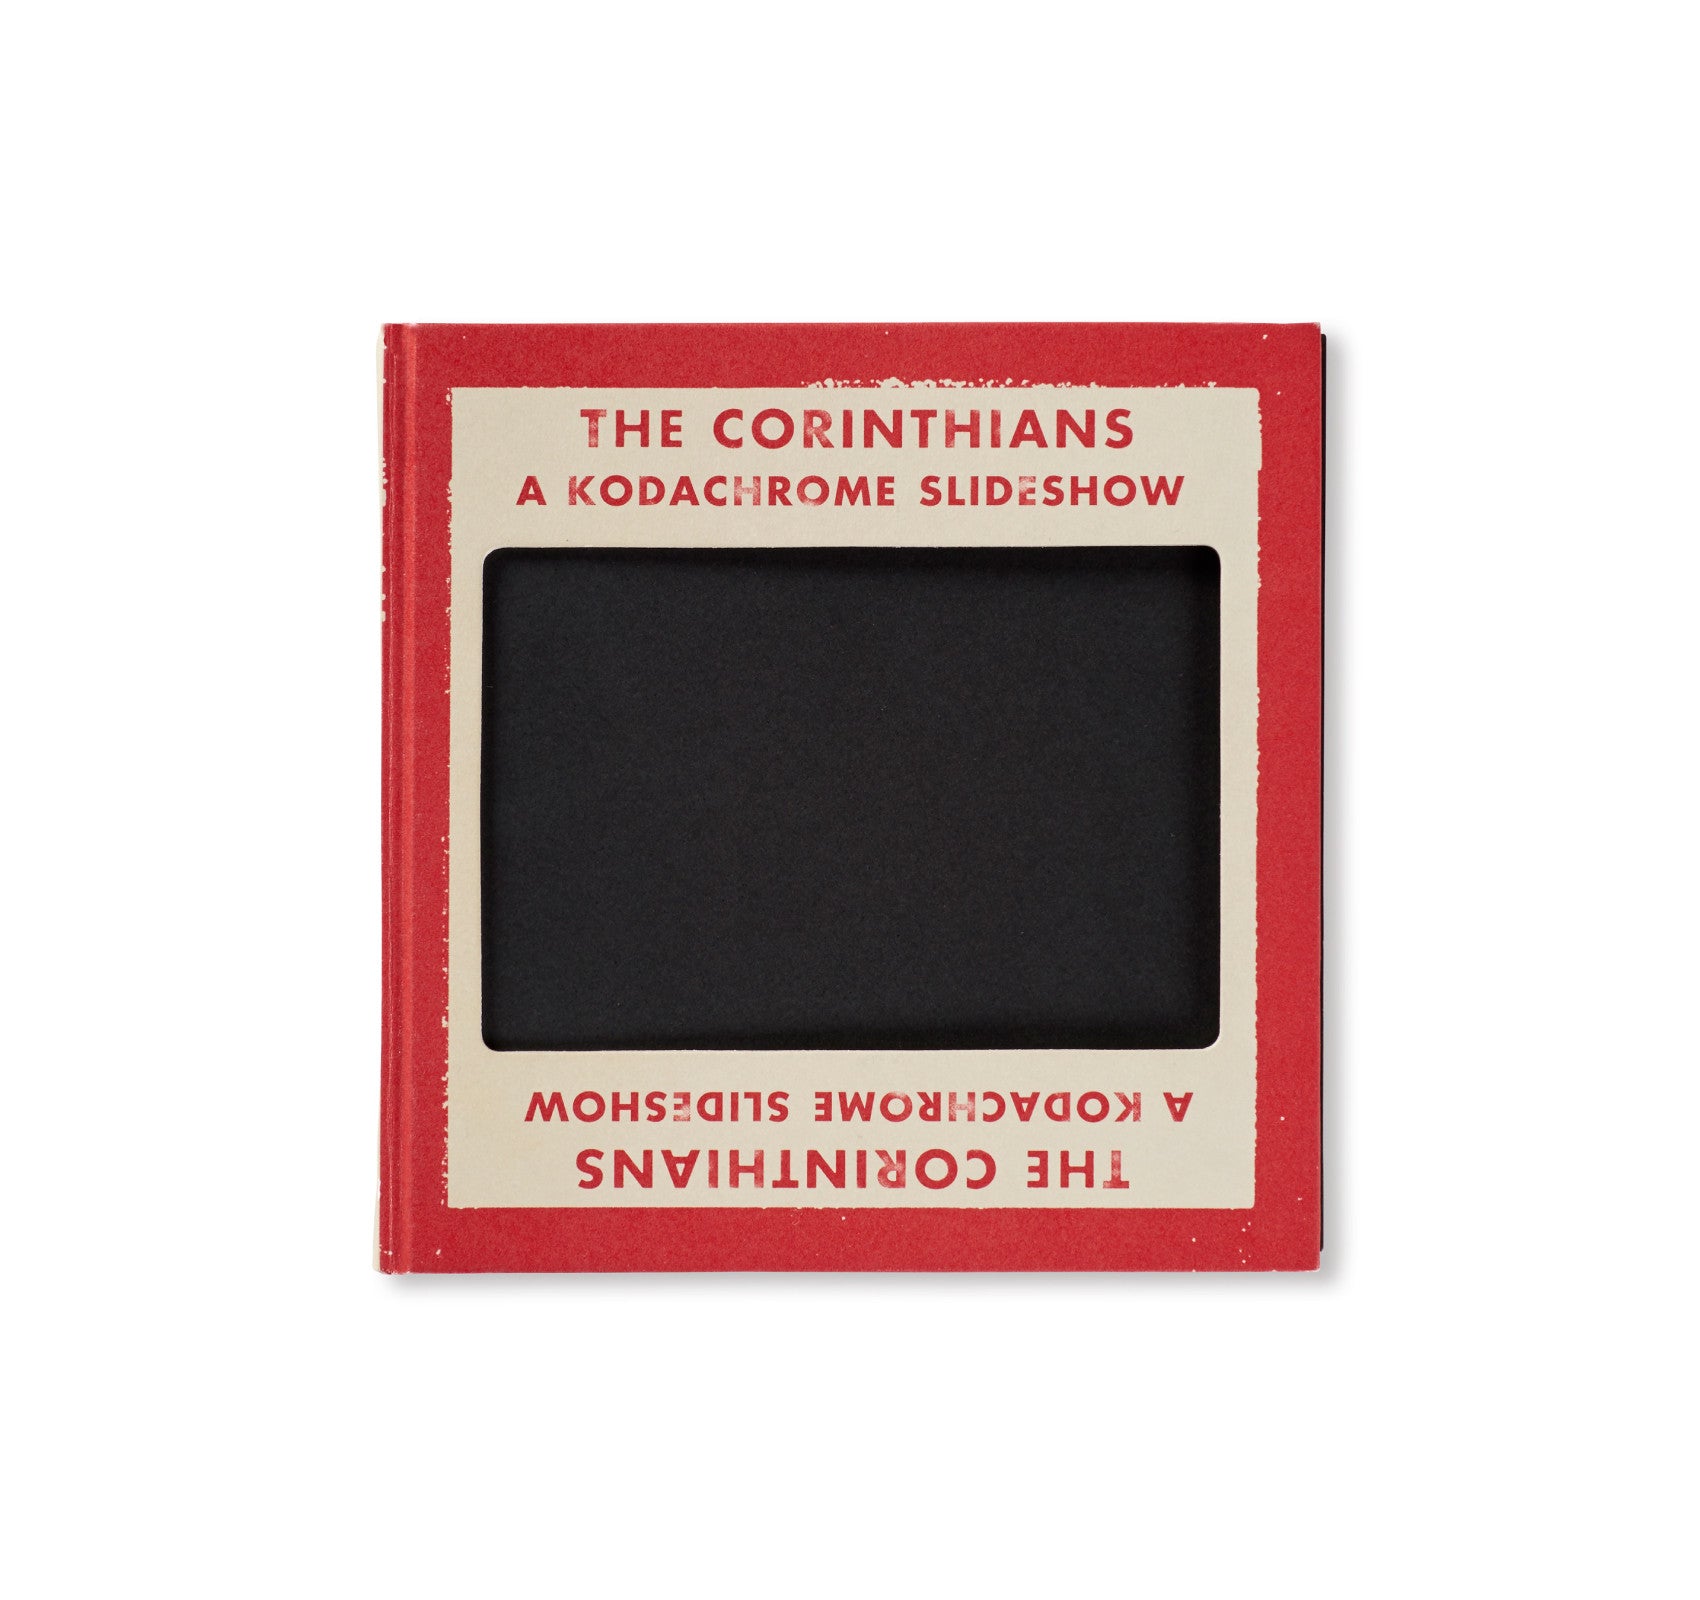 THE CORINTHIANS: A KODACHROME SLIDESHOW by Ed Jones & Timothy Prus